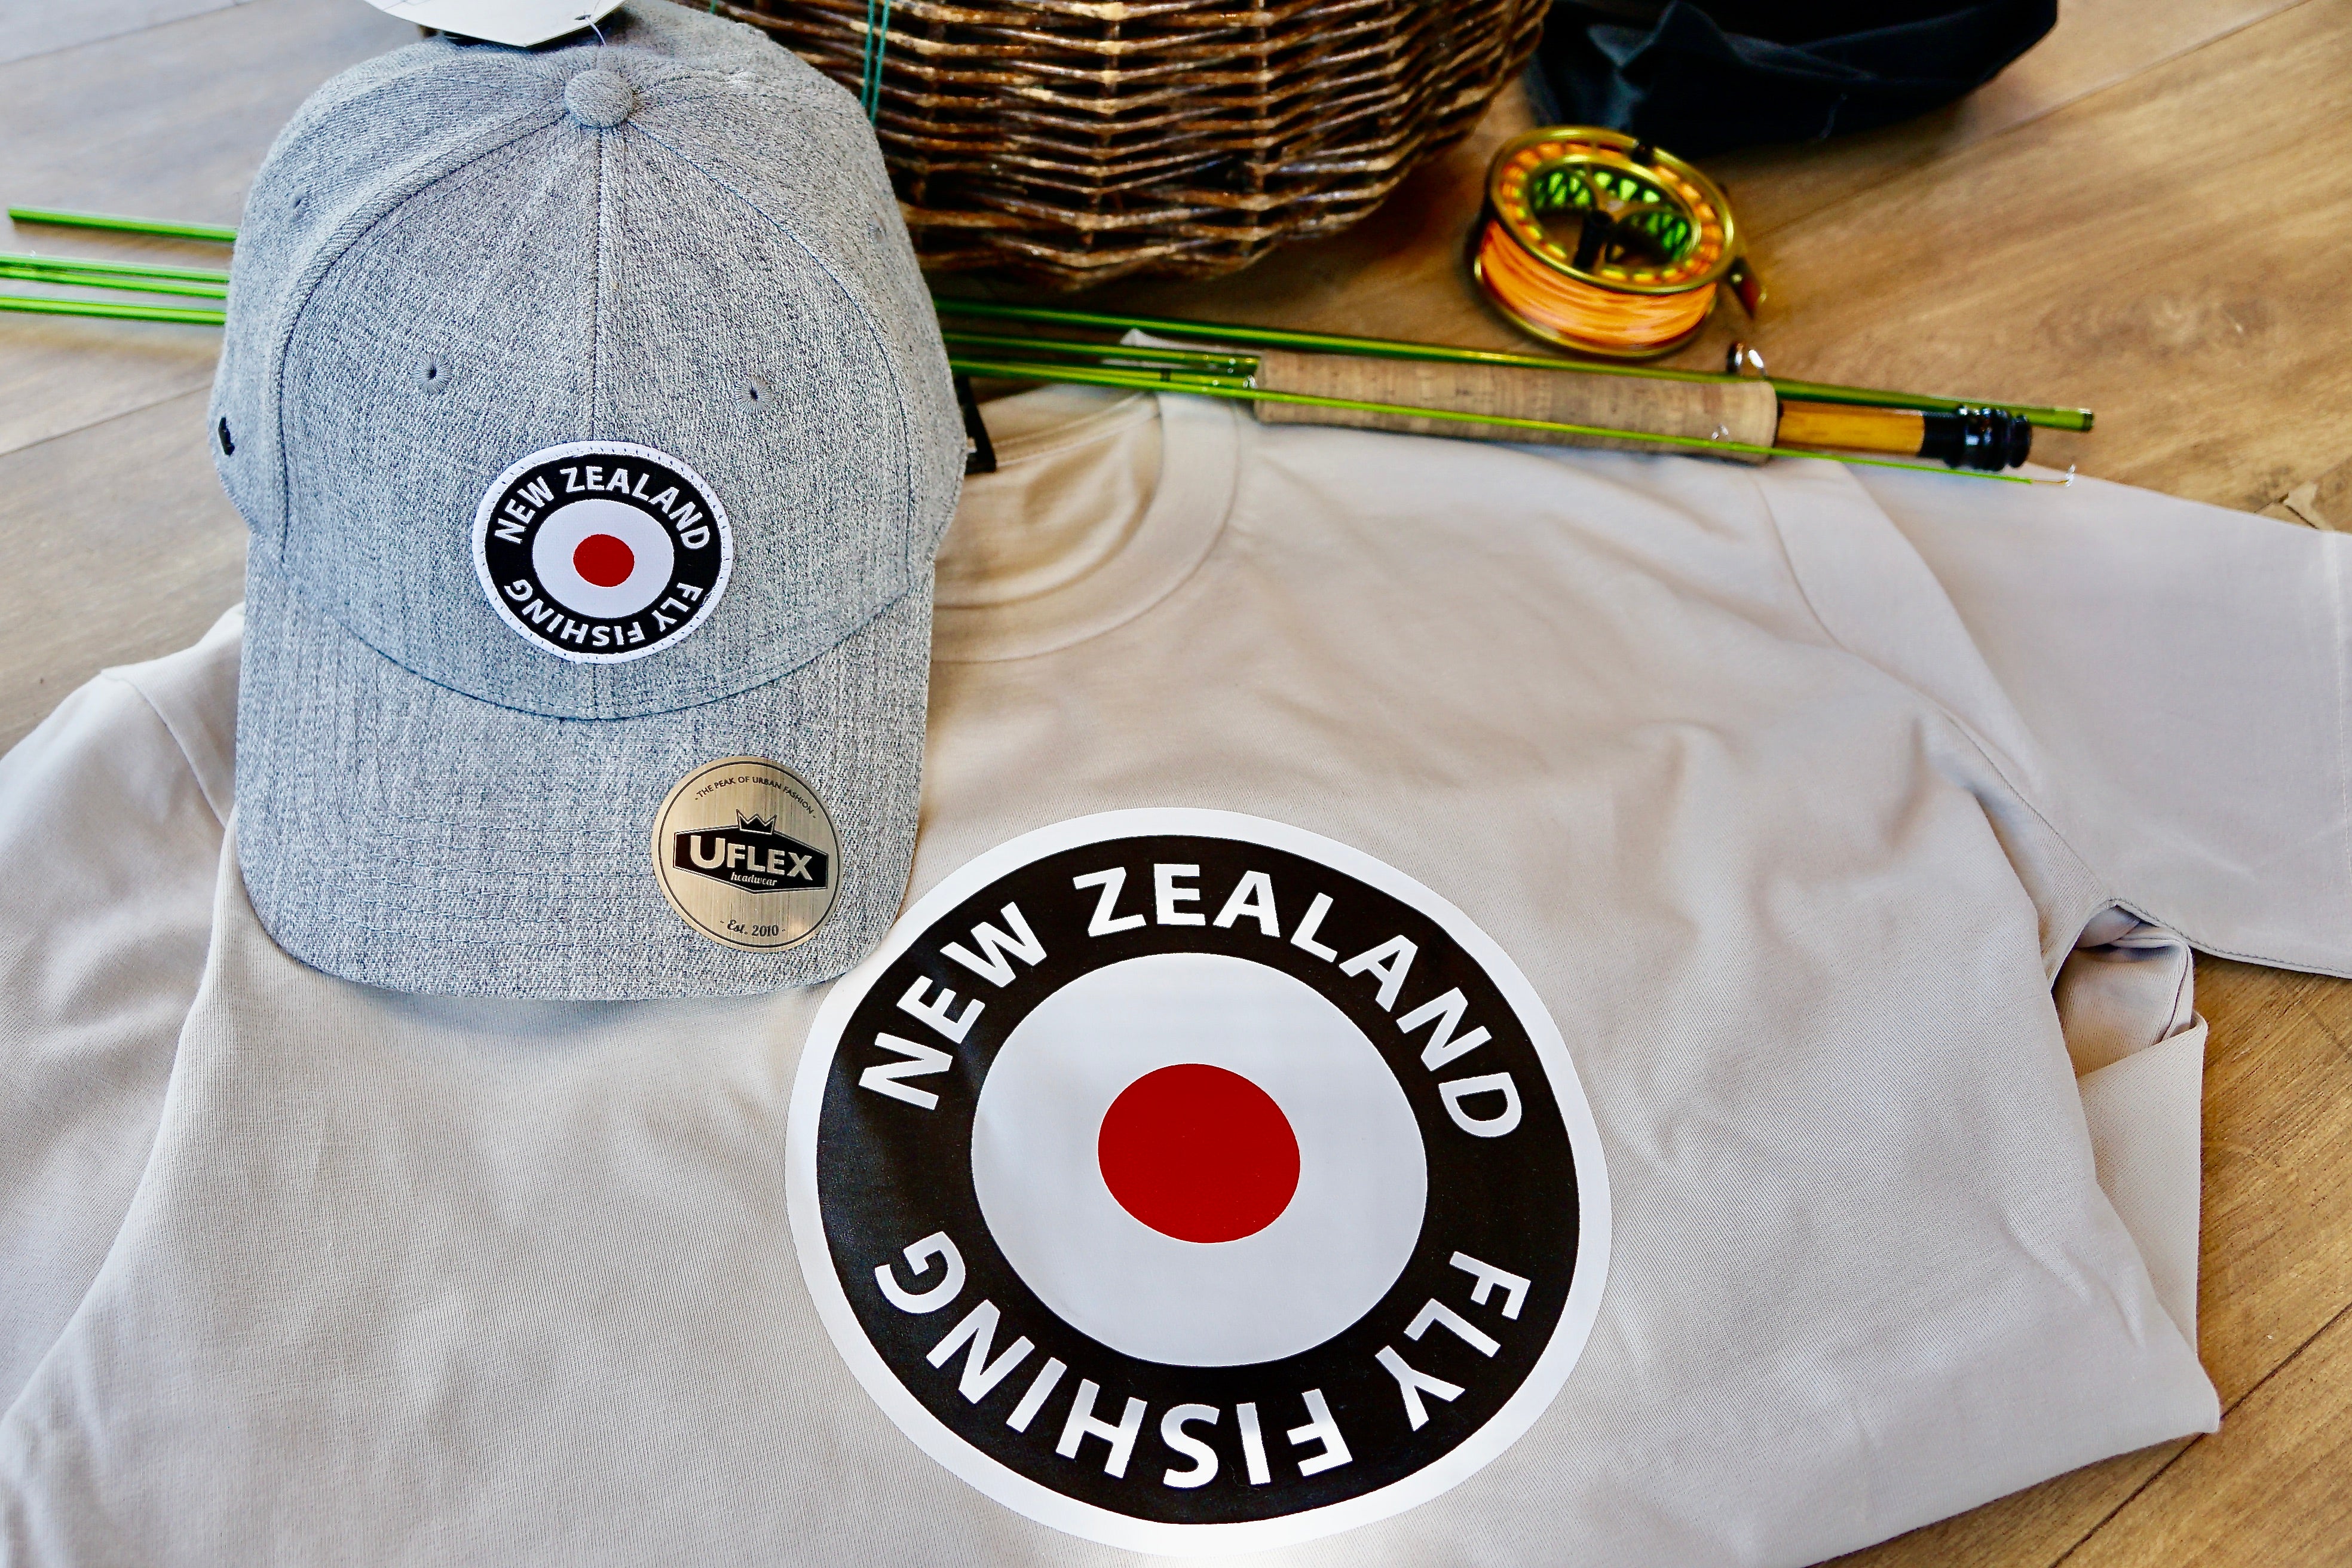 New Zealand Fly Fishing T-Shirt